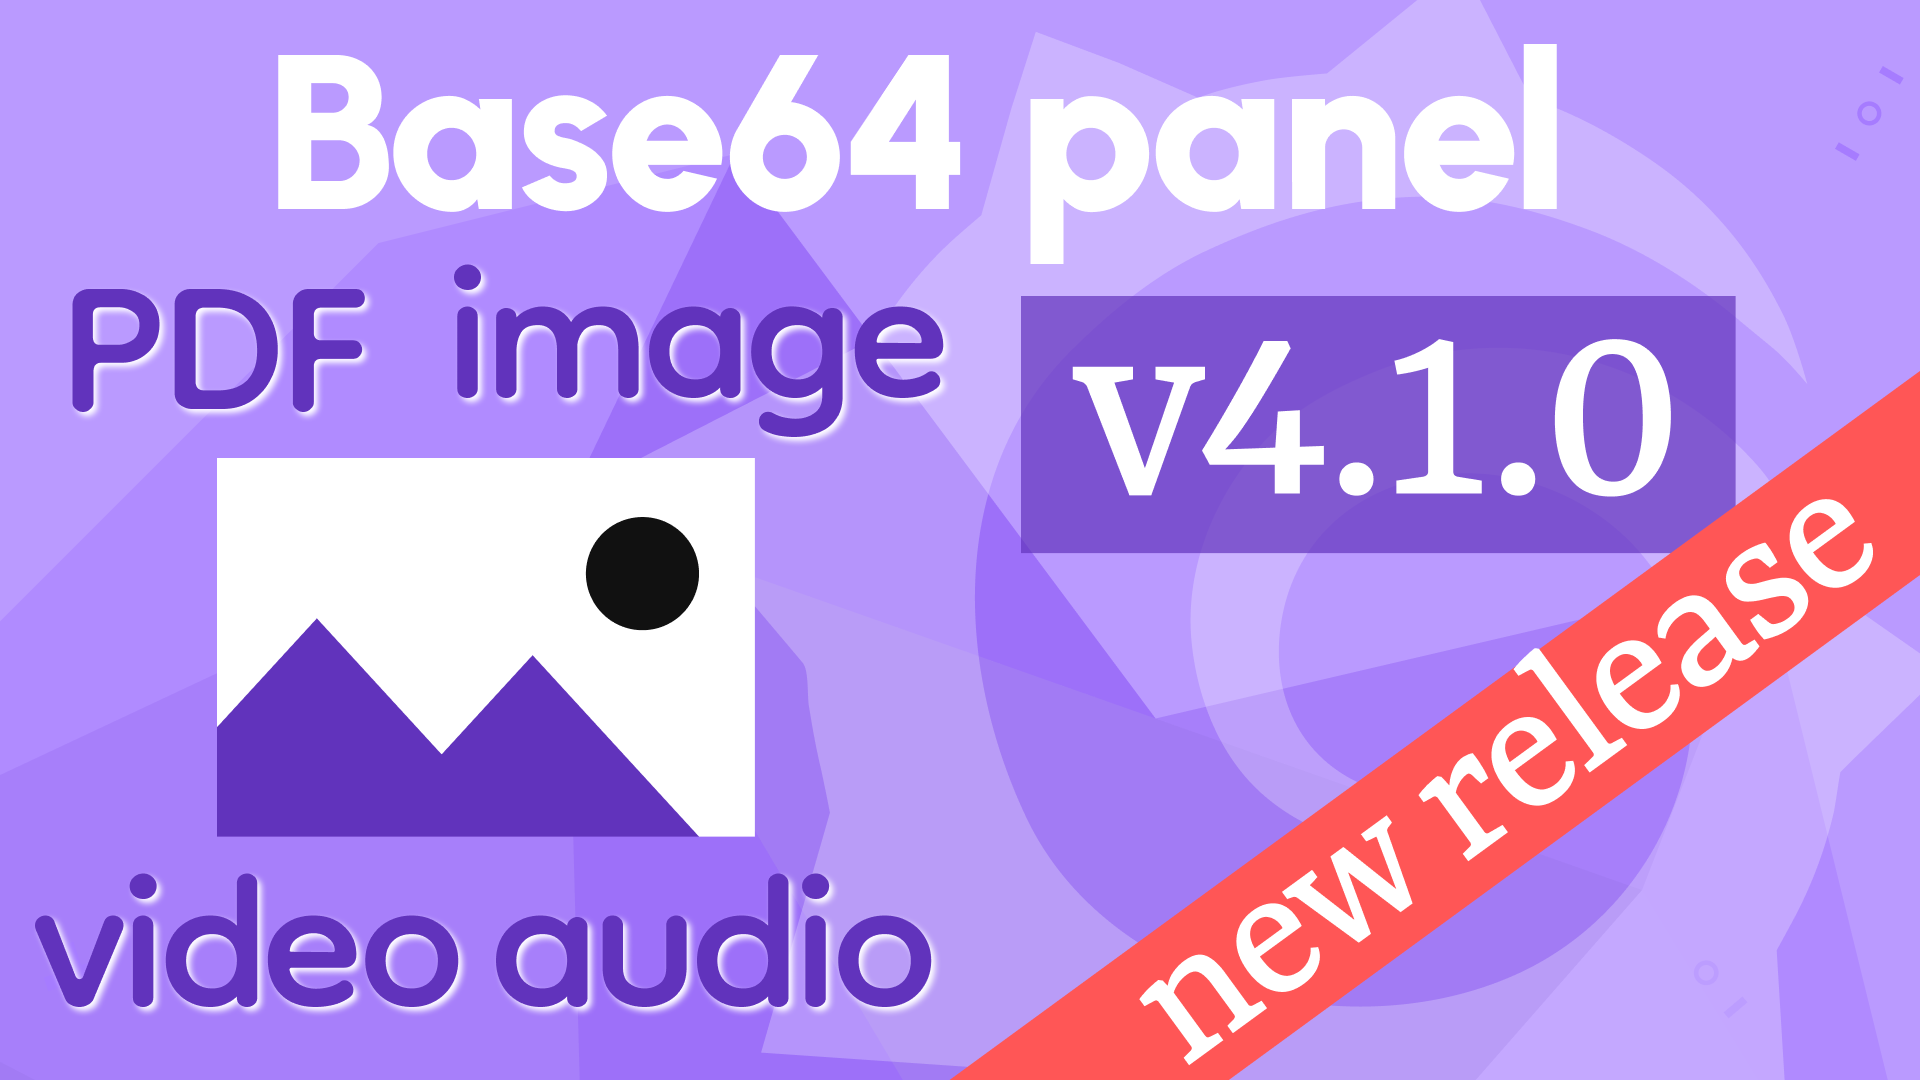 Base64 Image/Video/Audio/PDF Panel 4.1.0